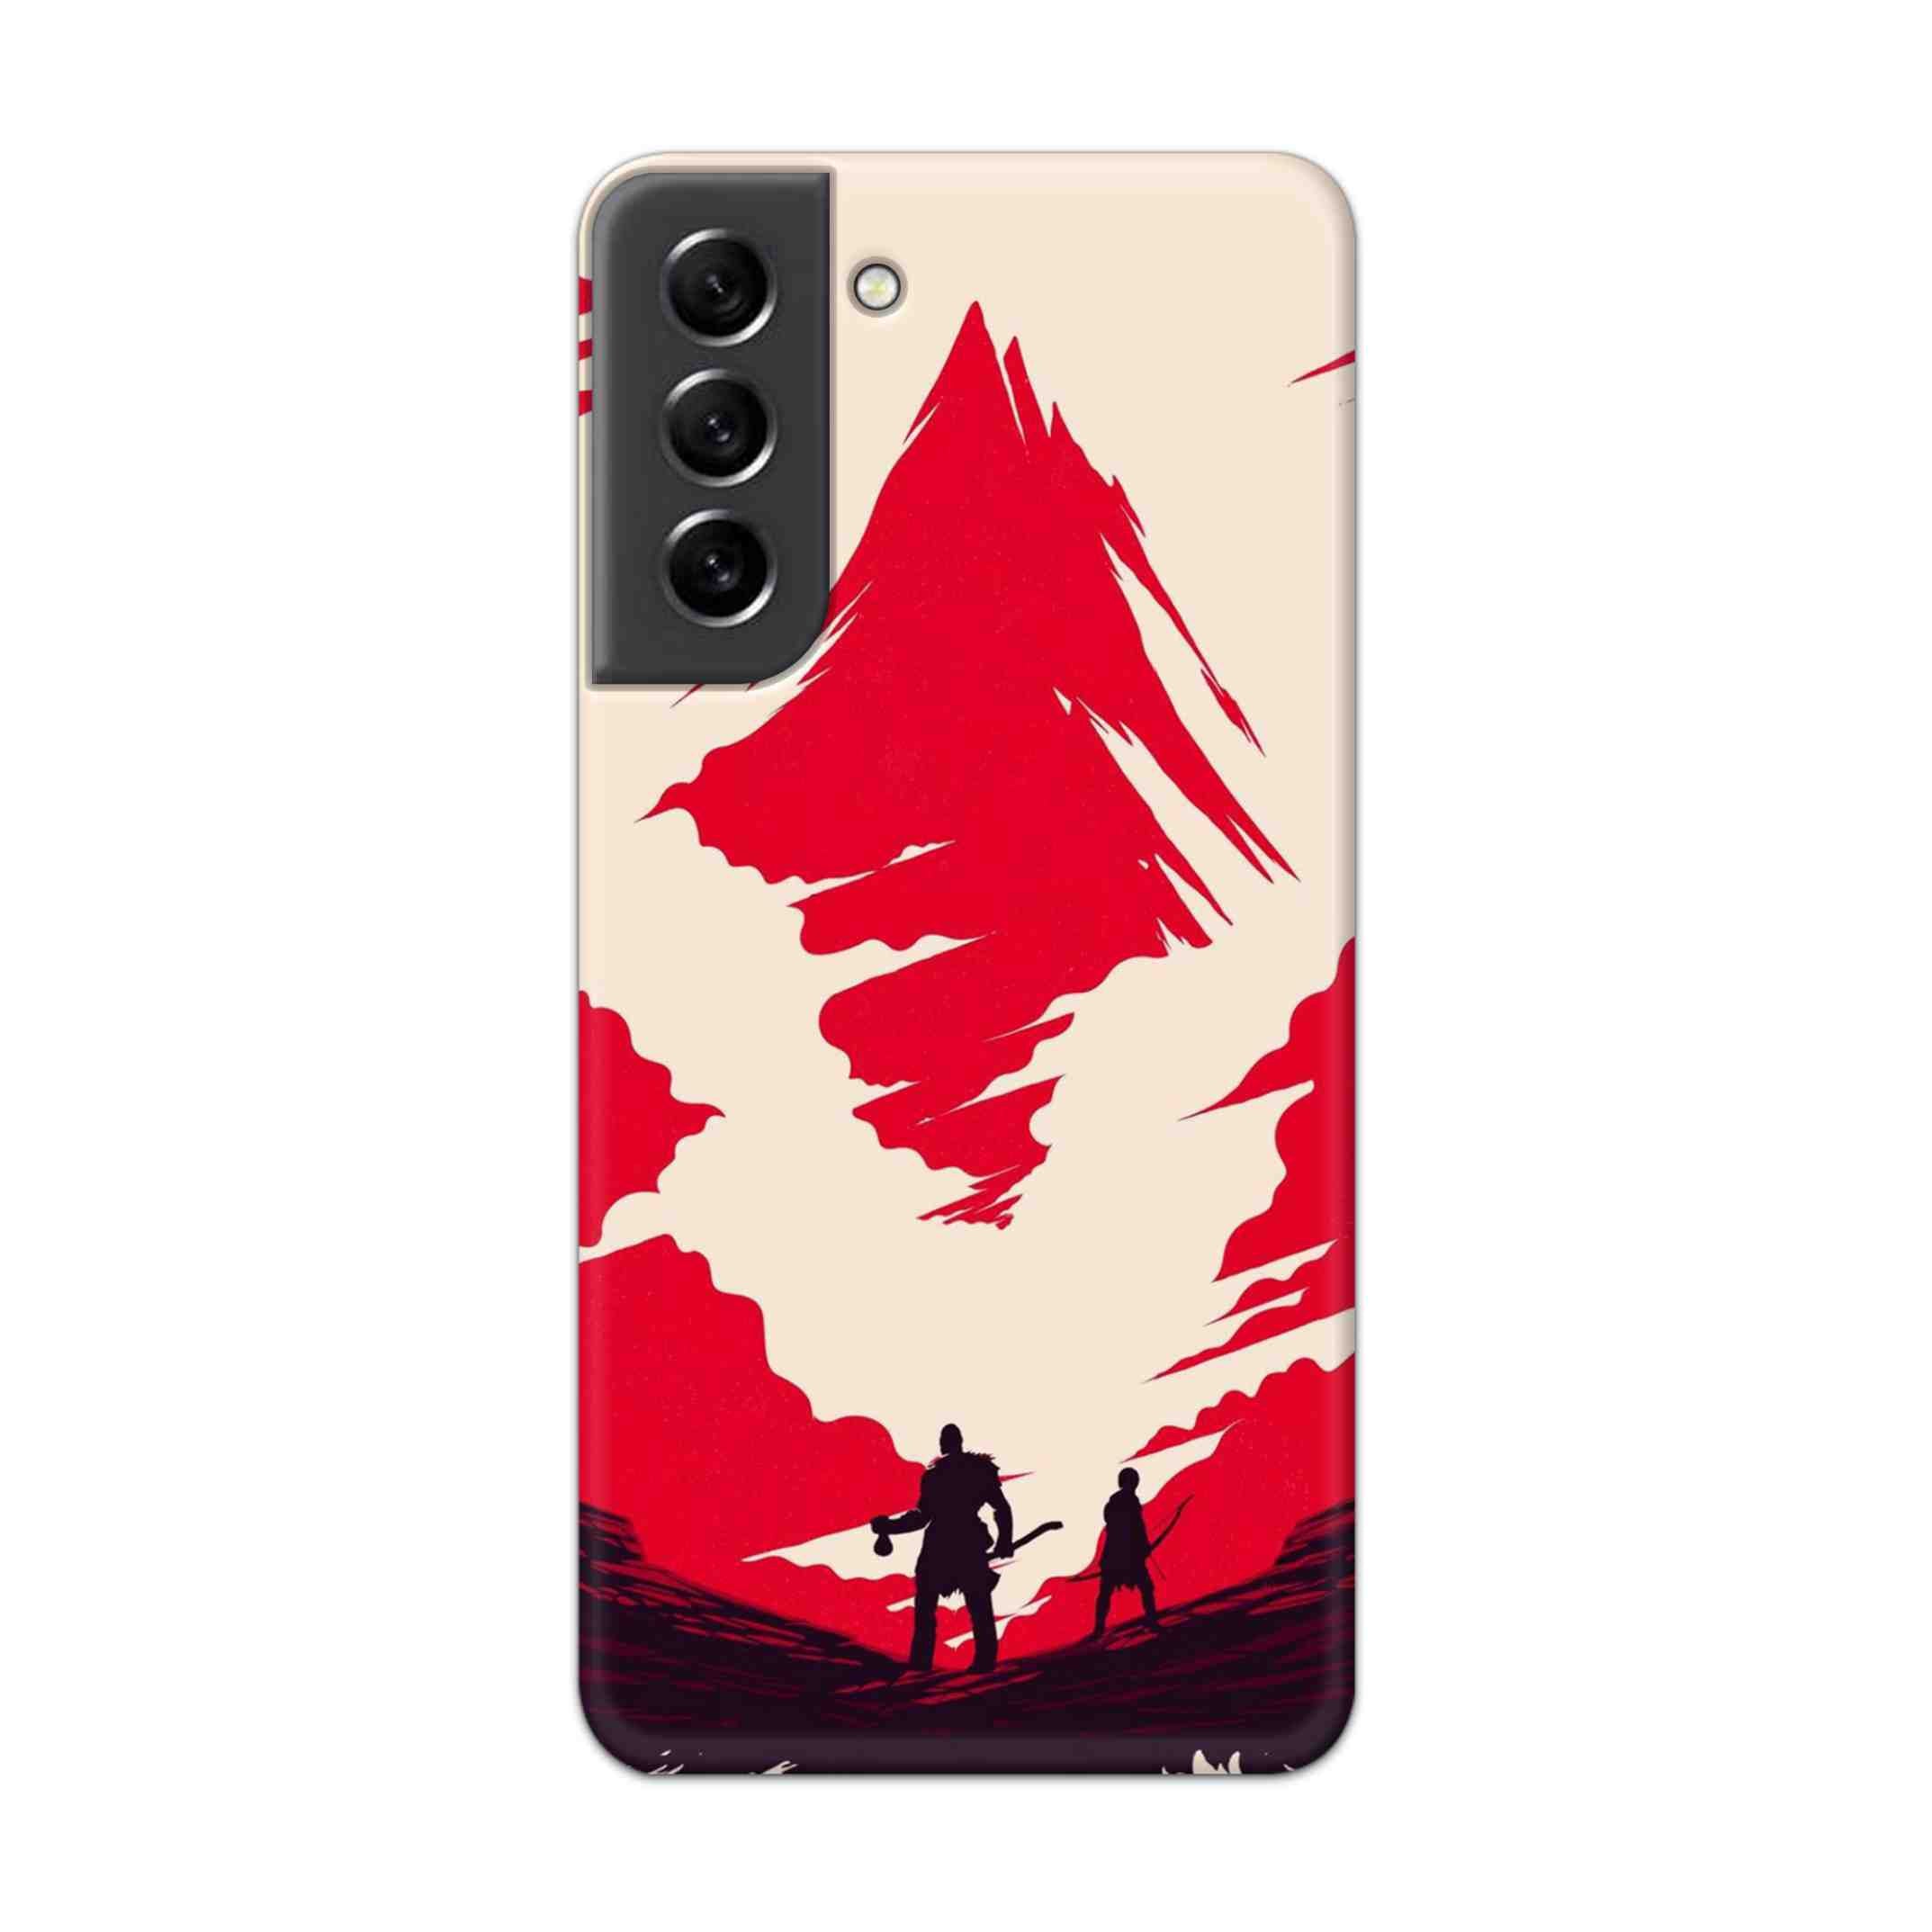 Buy God Of War Art Hard Back Mobile Phone Case Cover For Samsung S21 FE Online